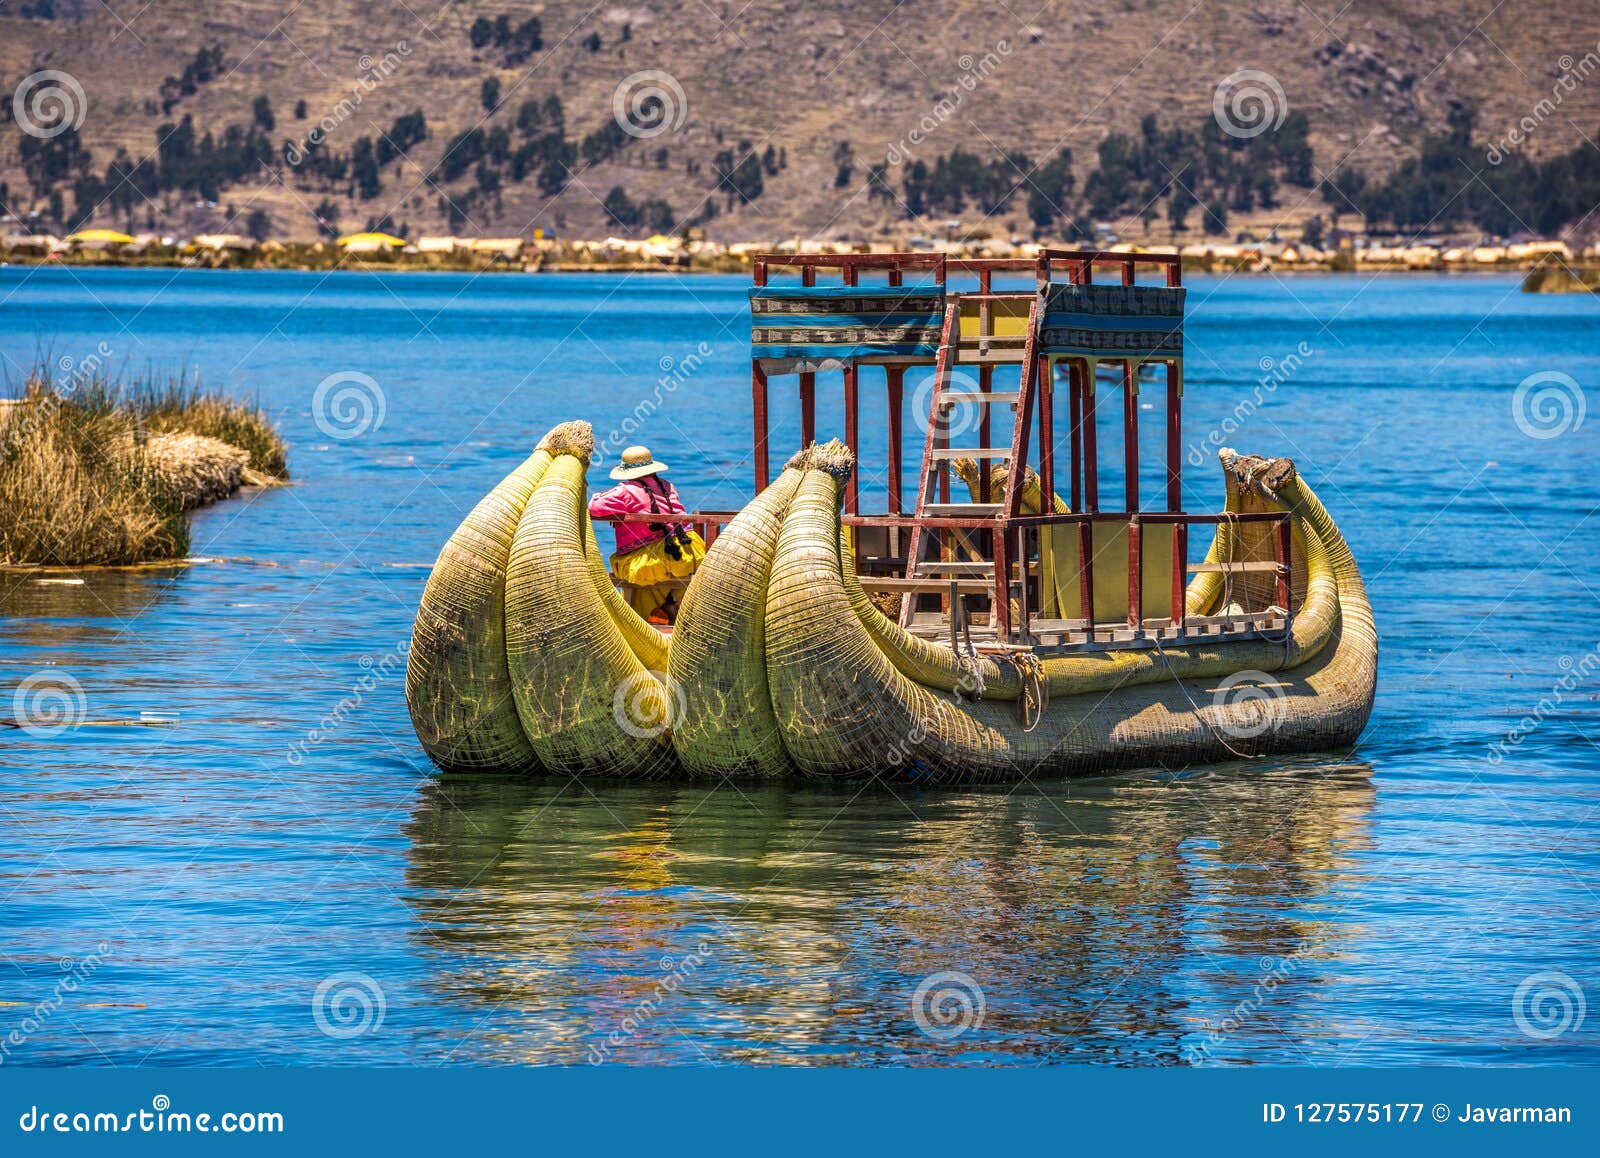 uros floating islands of lake titicaca, peru, south america